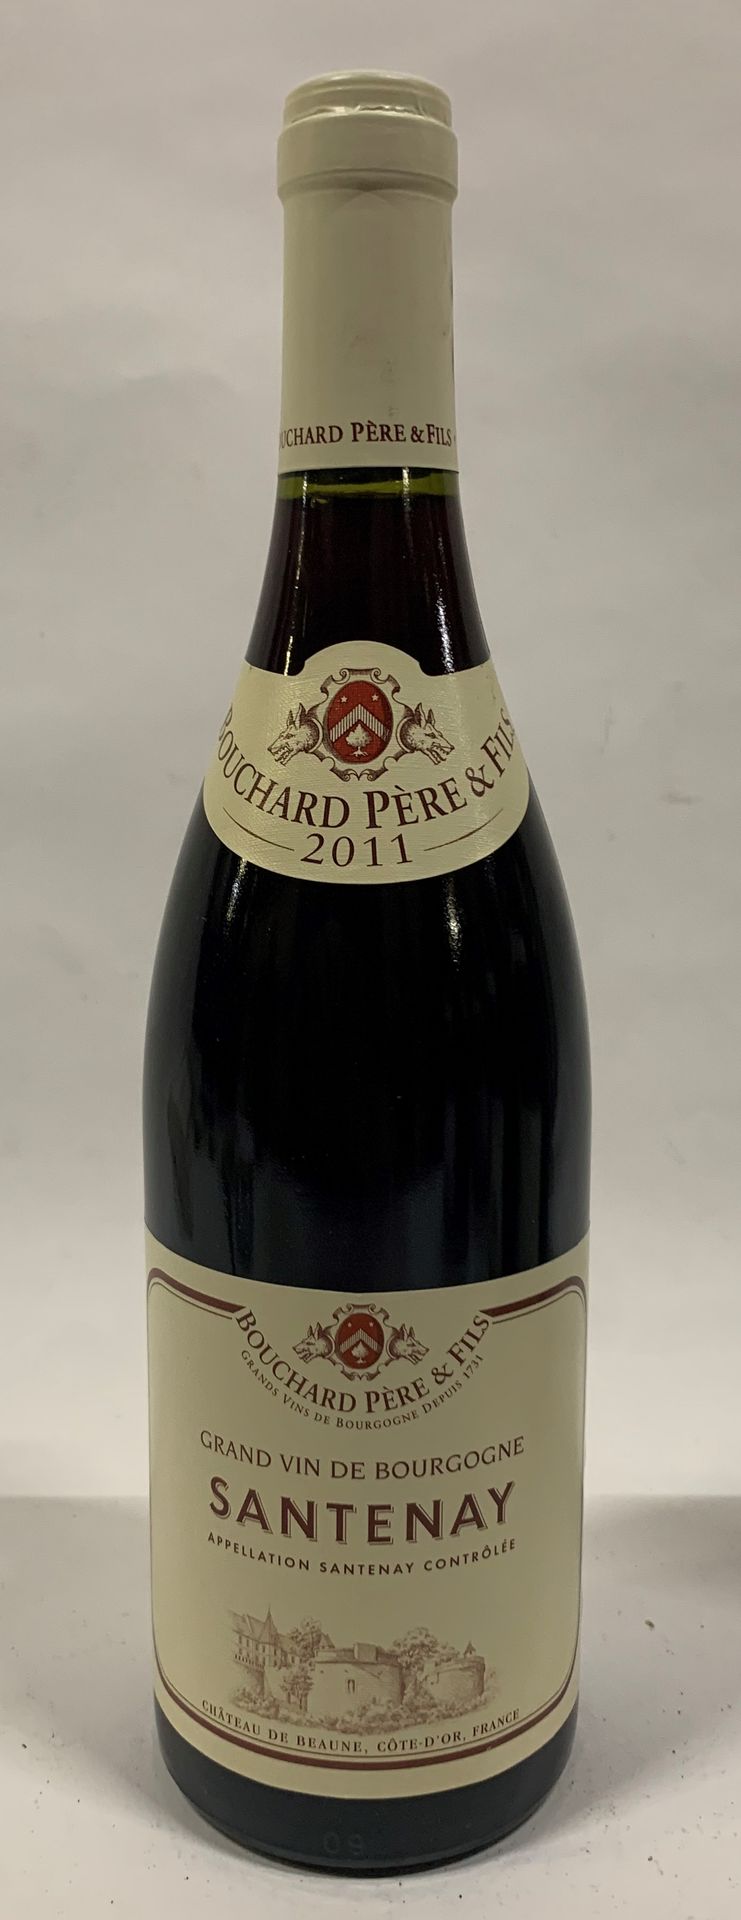 Null ● SANTENAY | Bouchard Père & Fils, 2011

6 botellas

Ref. 42